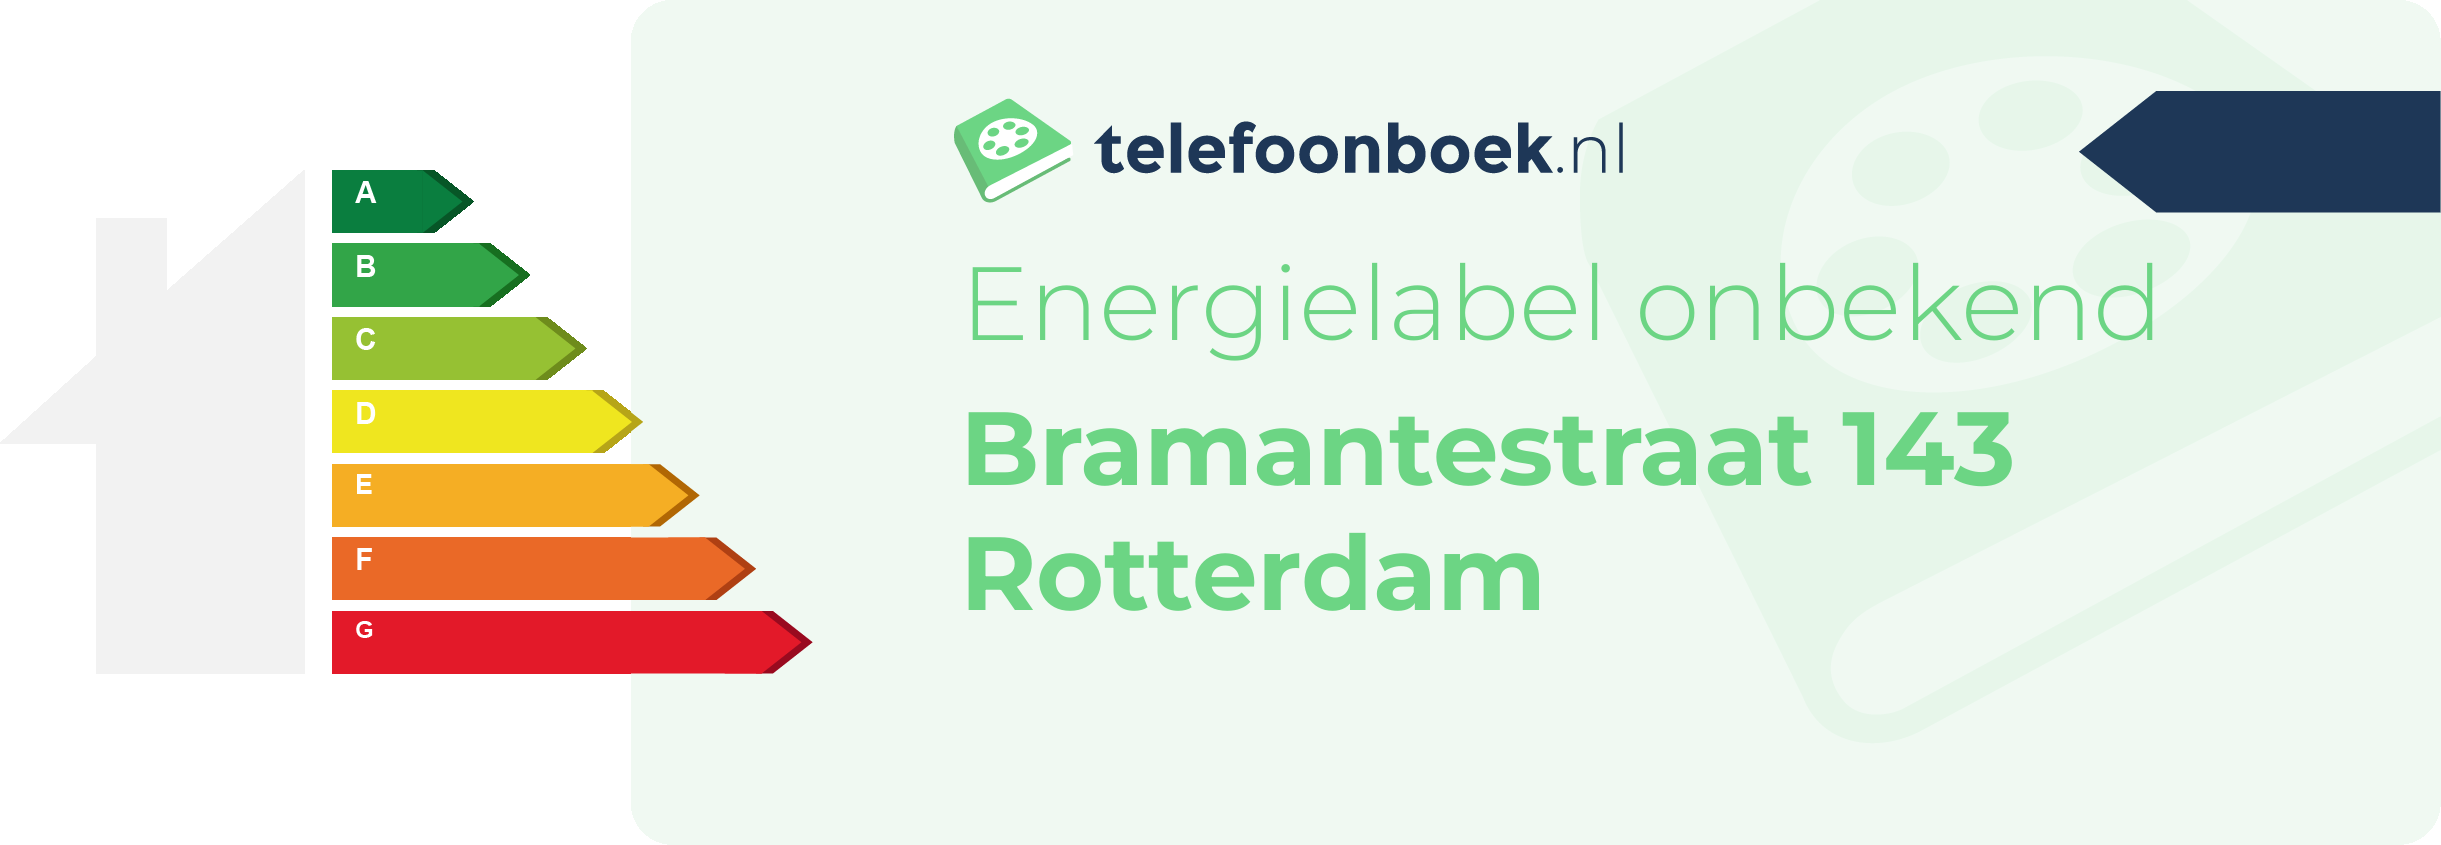 Energielabel Bramantestraat 143 Rotterdam